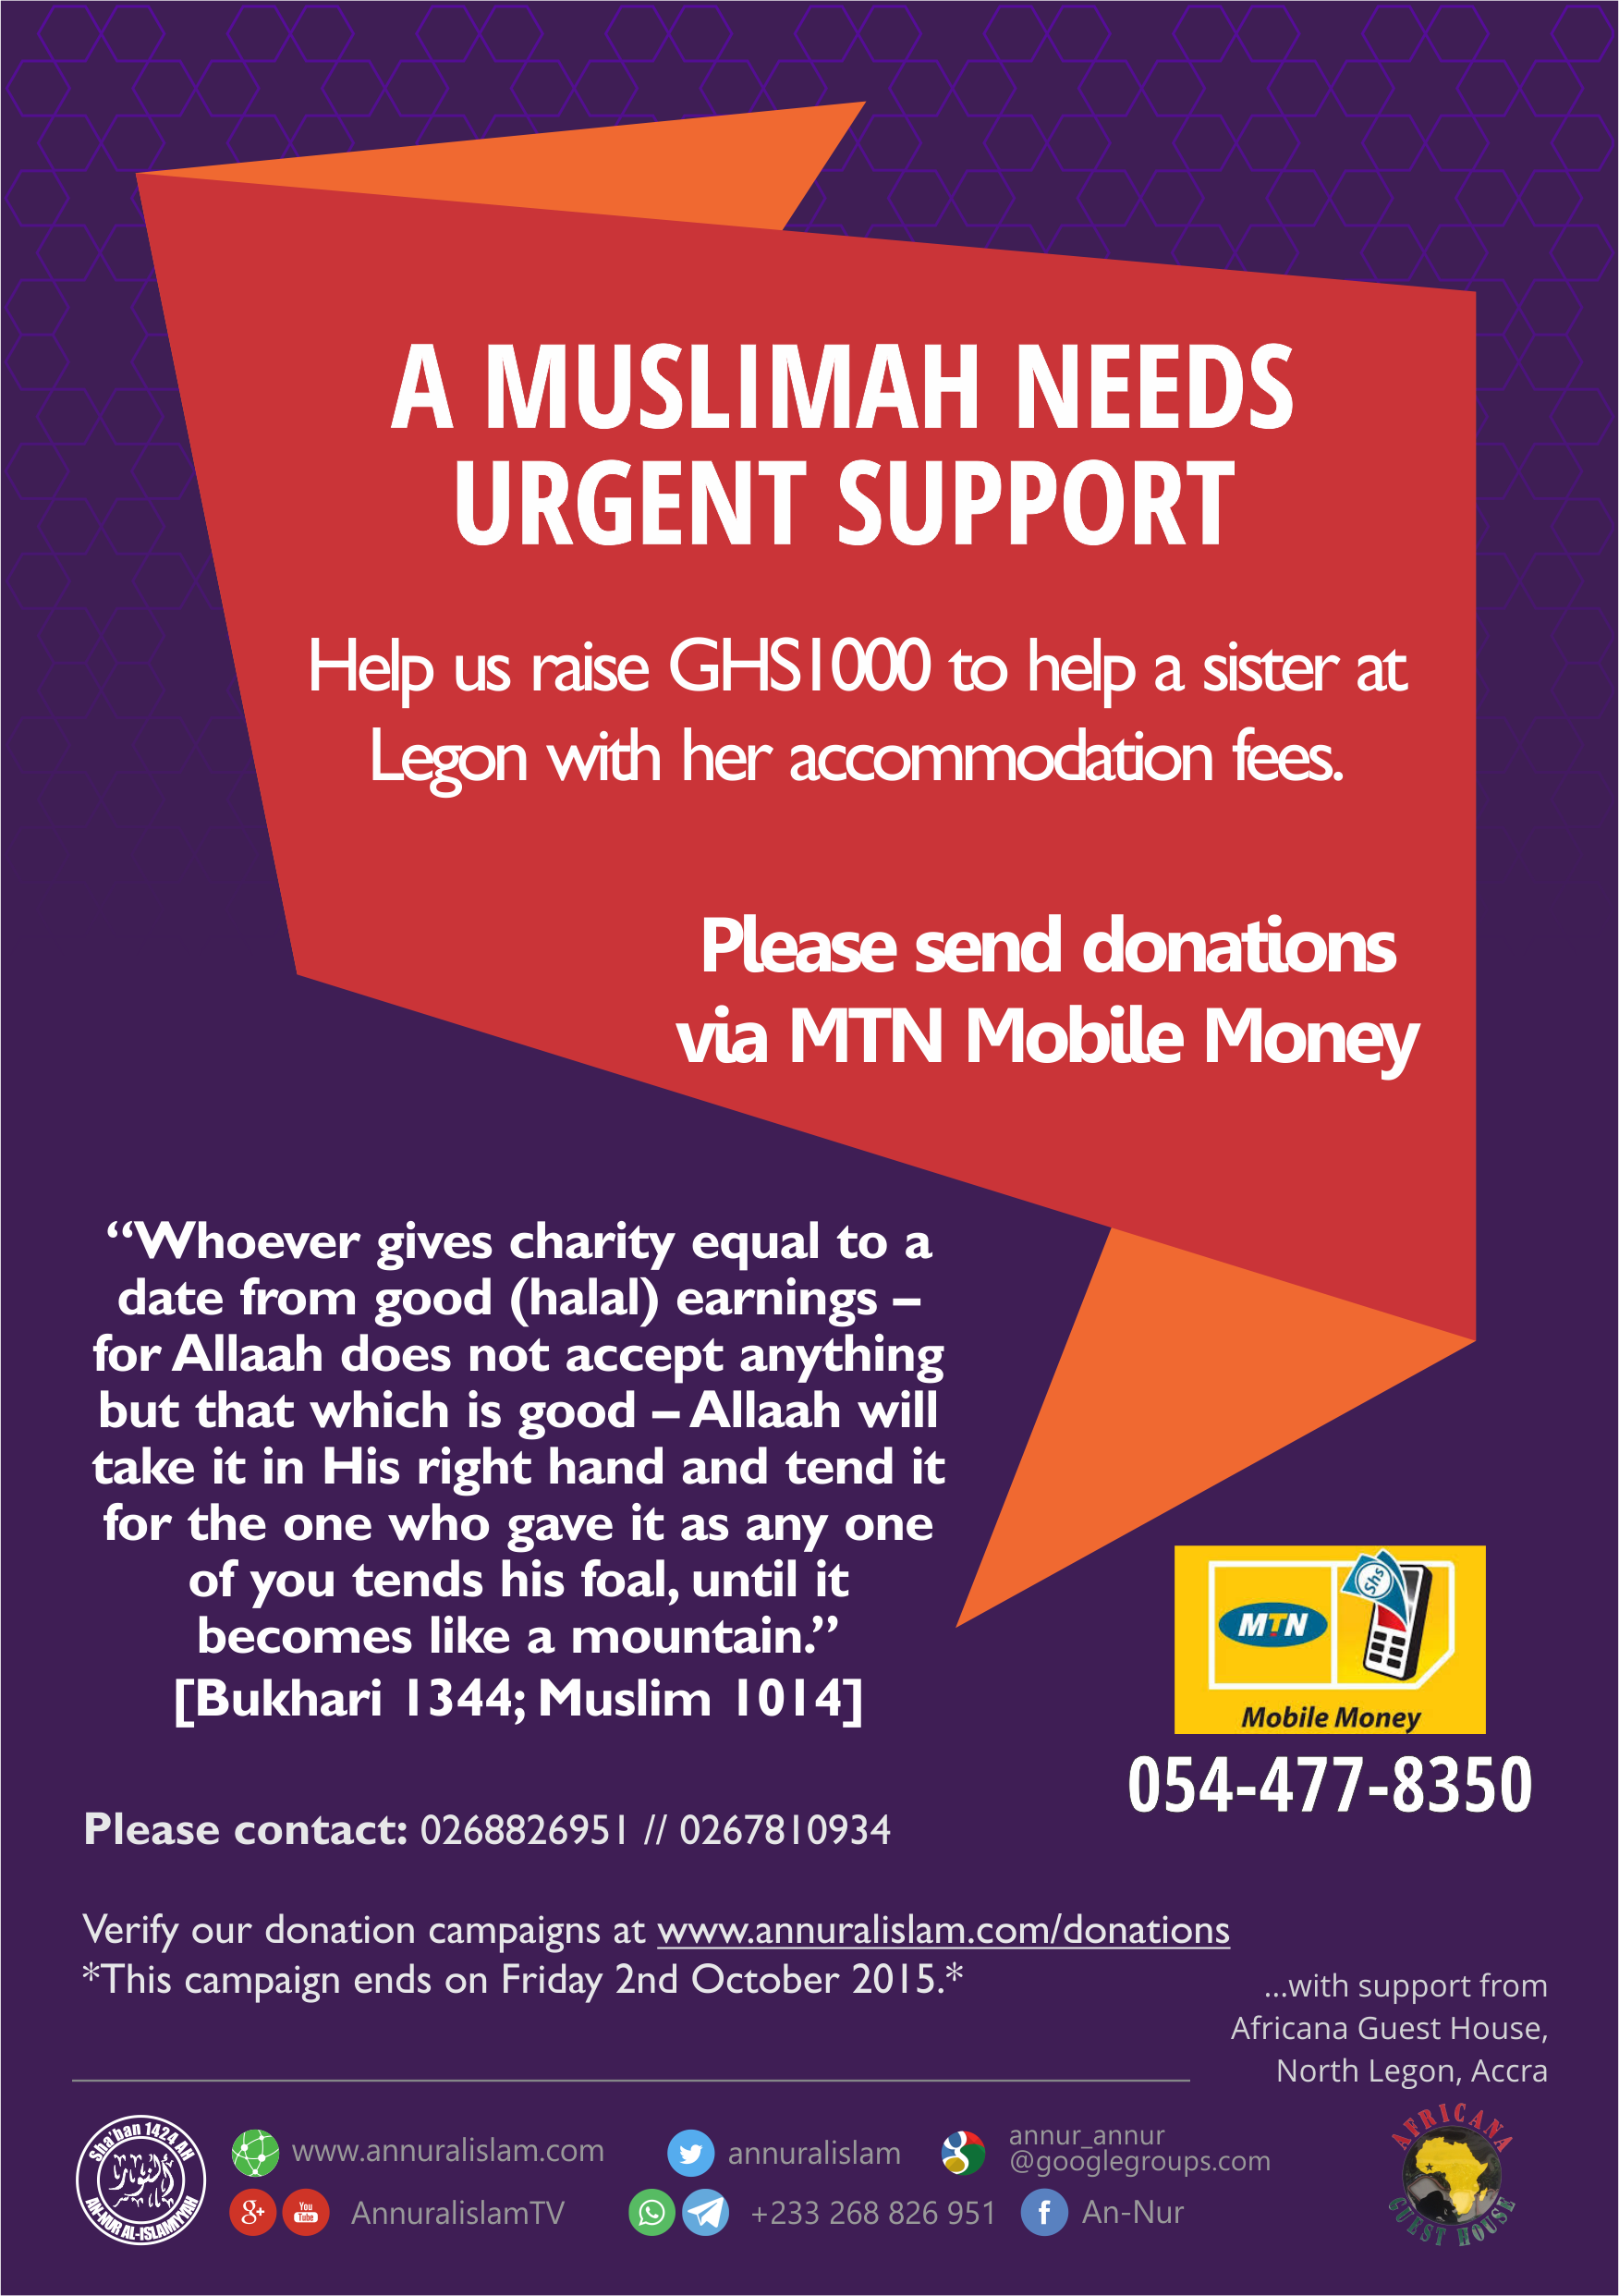 A Muslimah at Legon needs urgent support